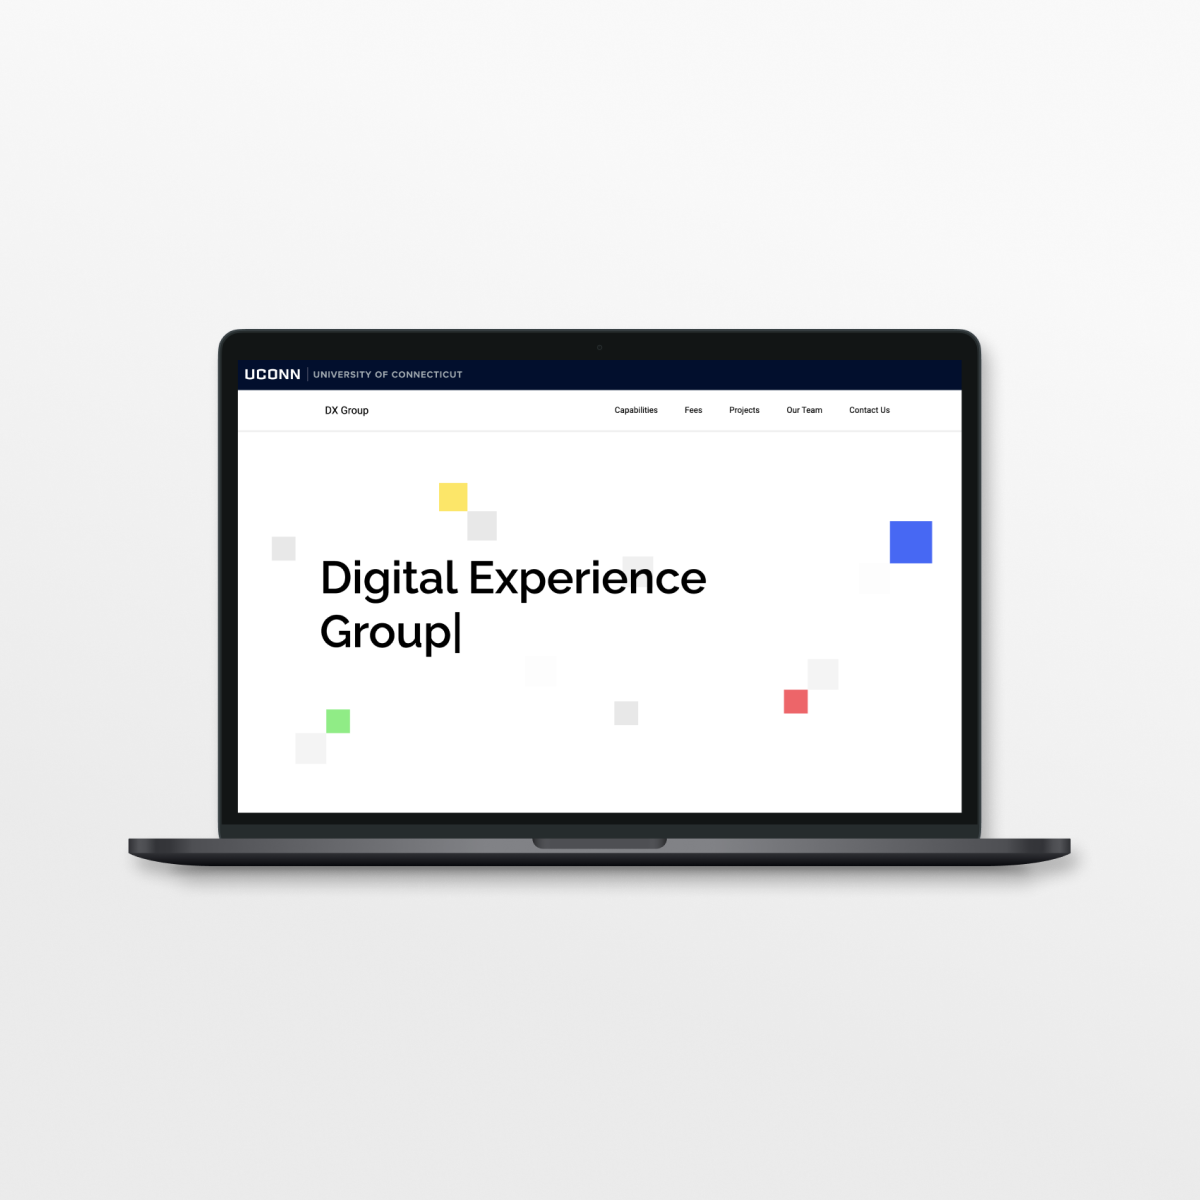 Digital experience group website header on tablet